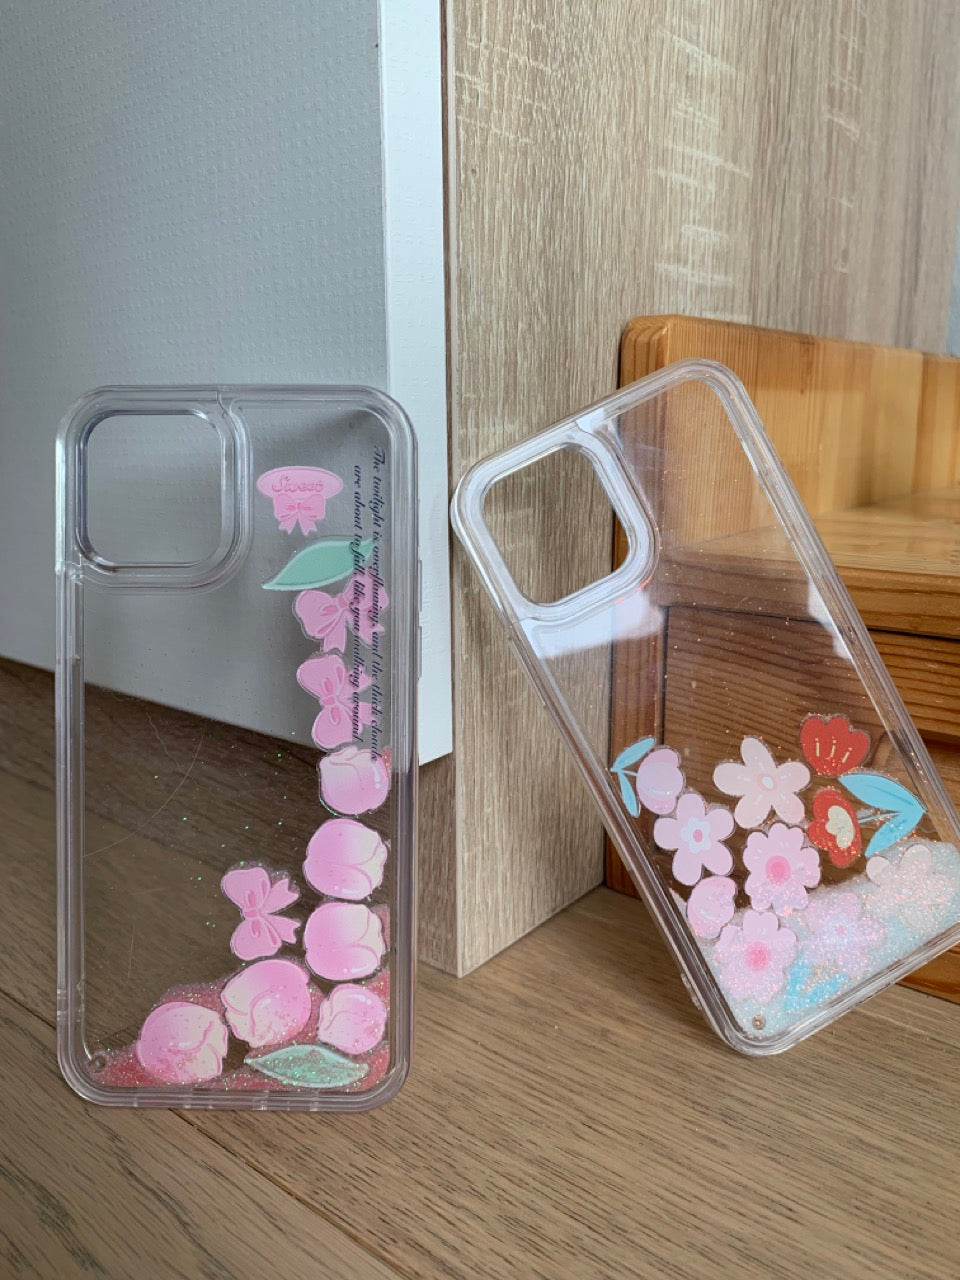 Glitter Quicksand Peach and Flower Phone Case